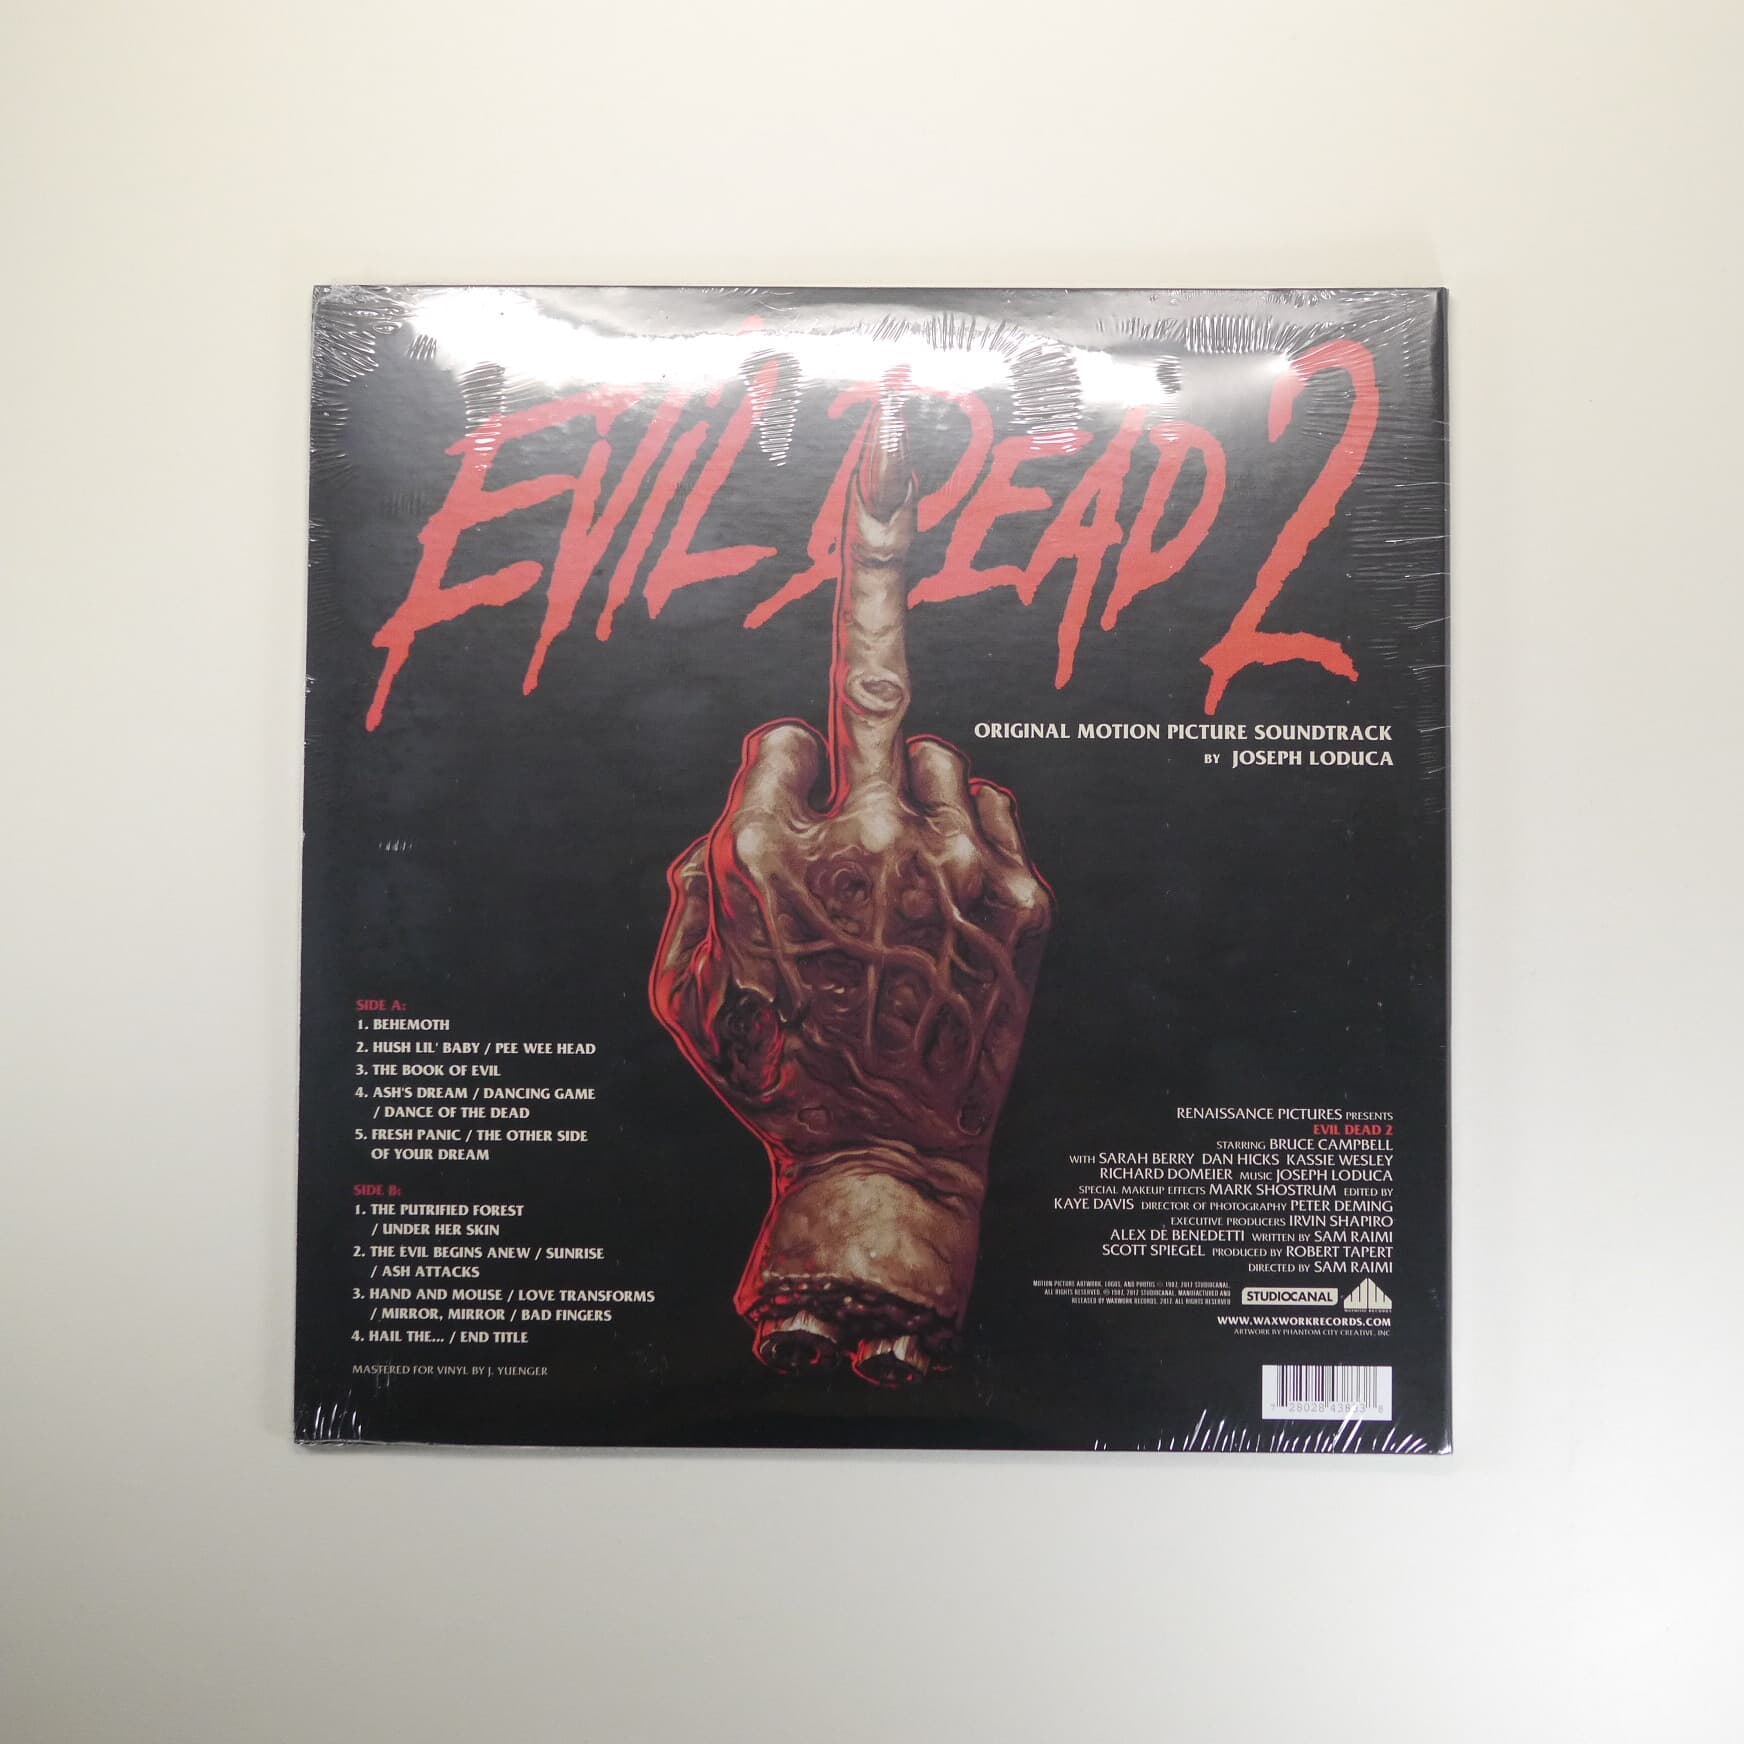 Joseph Loduca - Evil Dead 2 (이블 데드 2)(O.S.T.)(Gatefold Cover)(180G)(Colored LP)